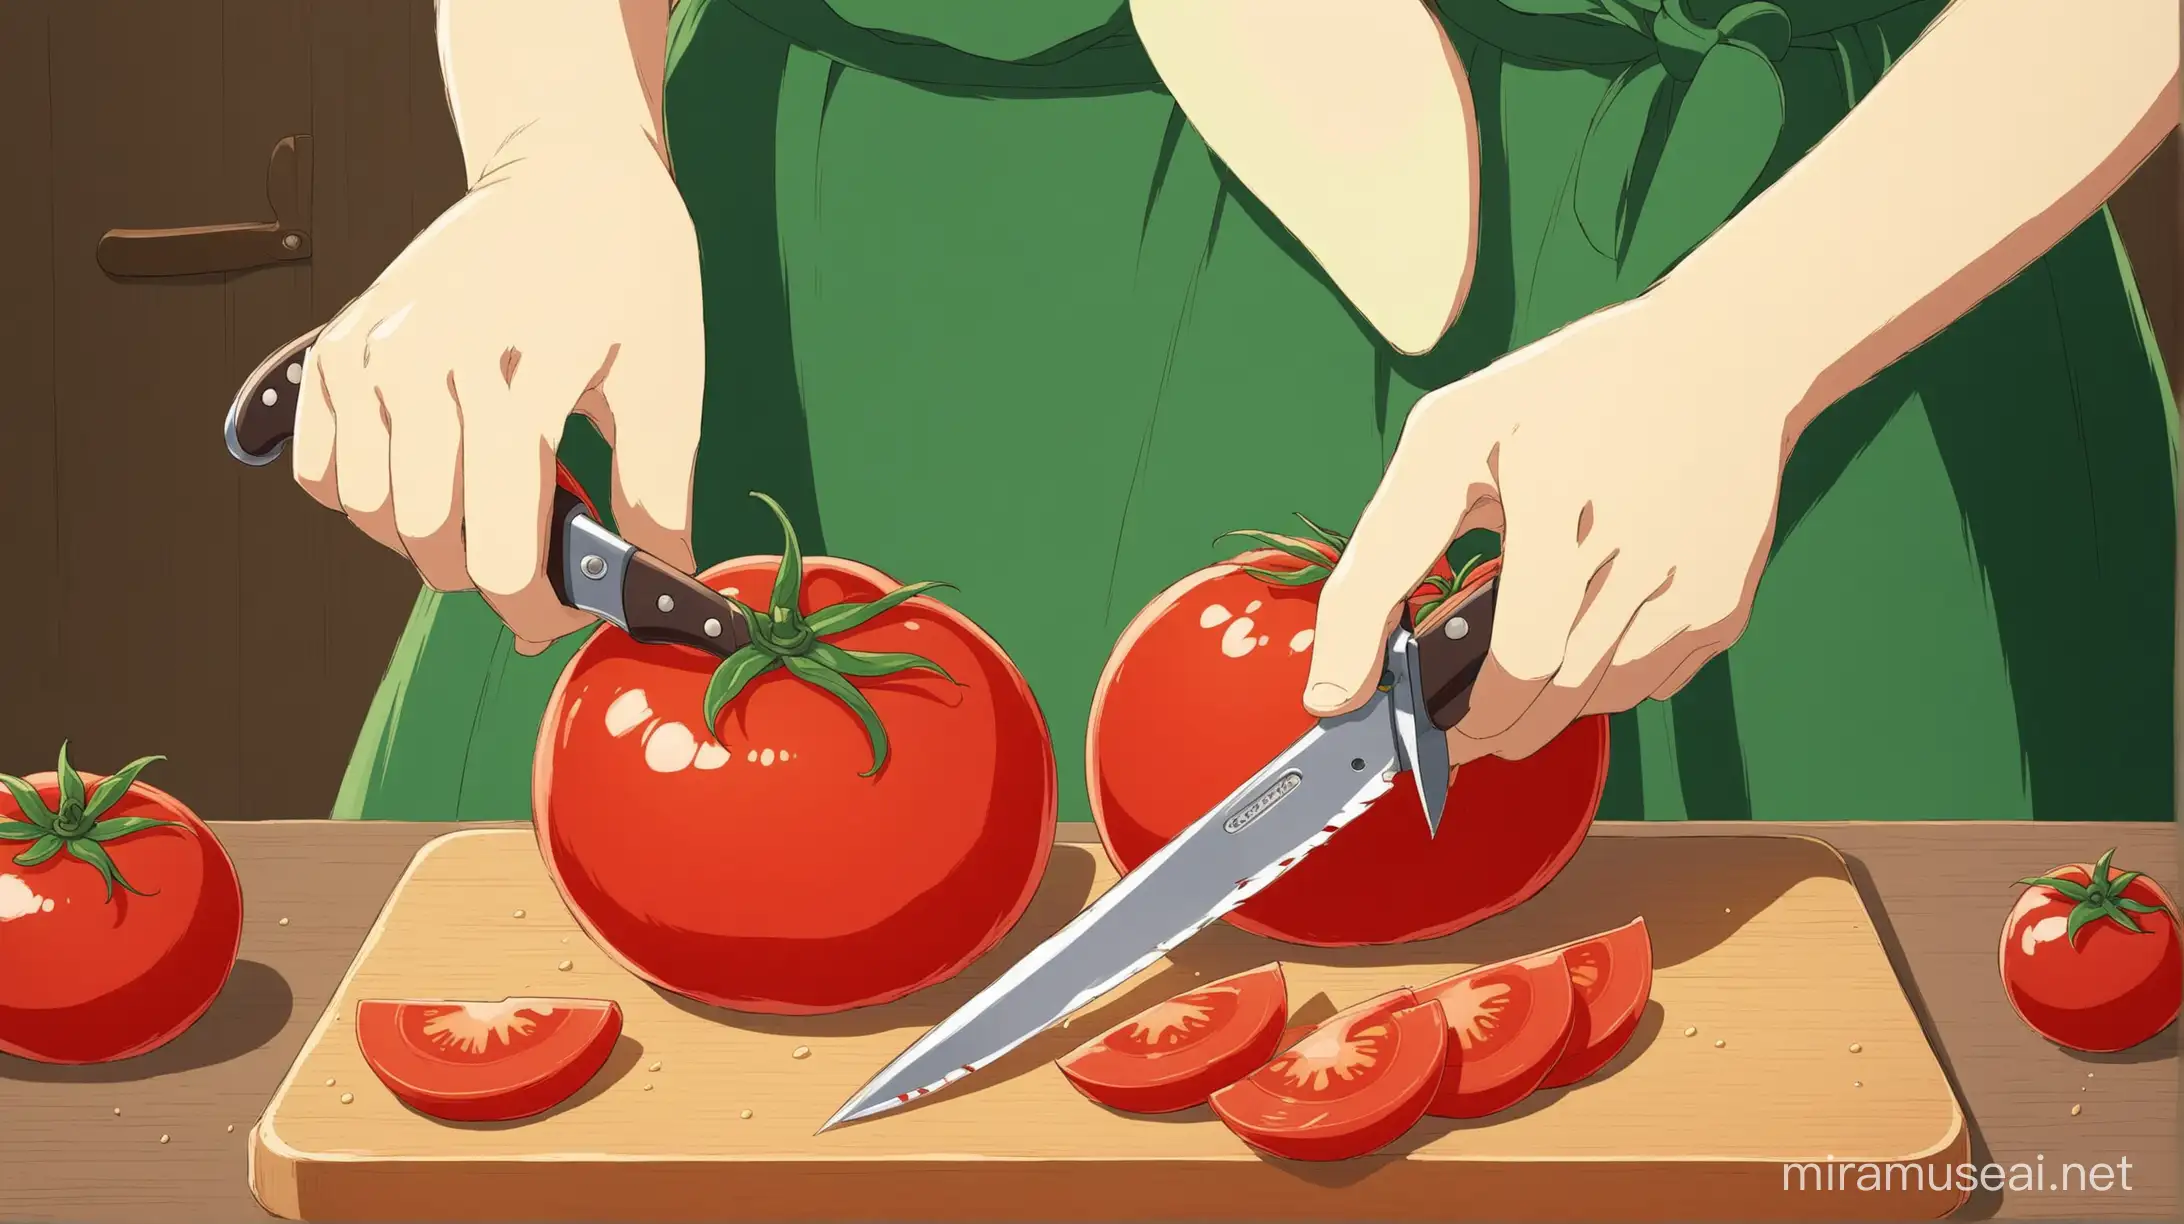 Anime Style Hand Cutting Tomato Studio Ghibli Inspired Scene